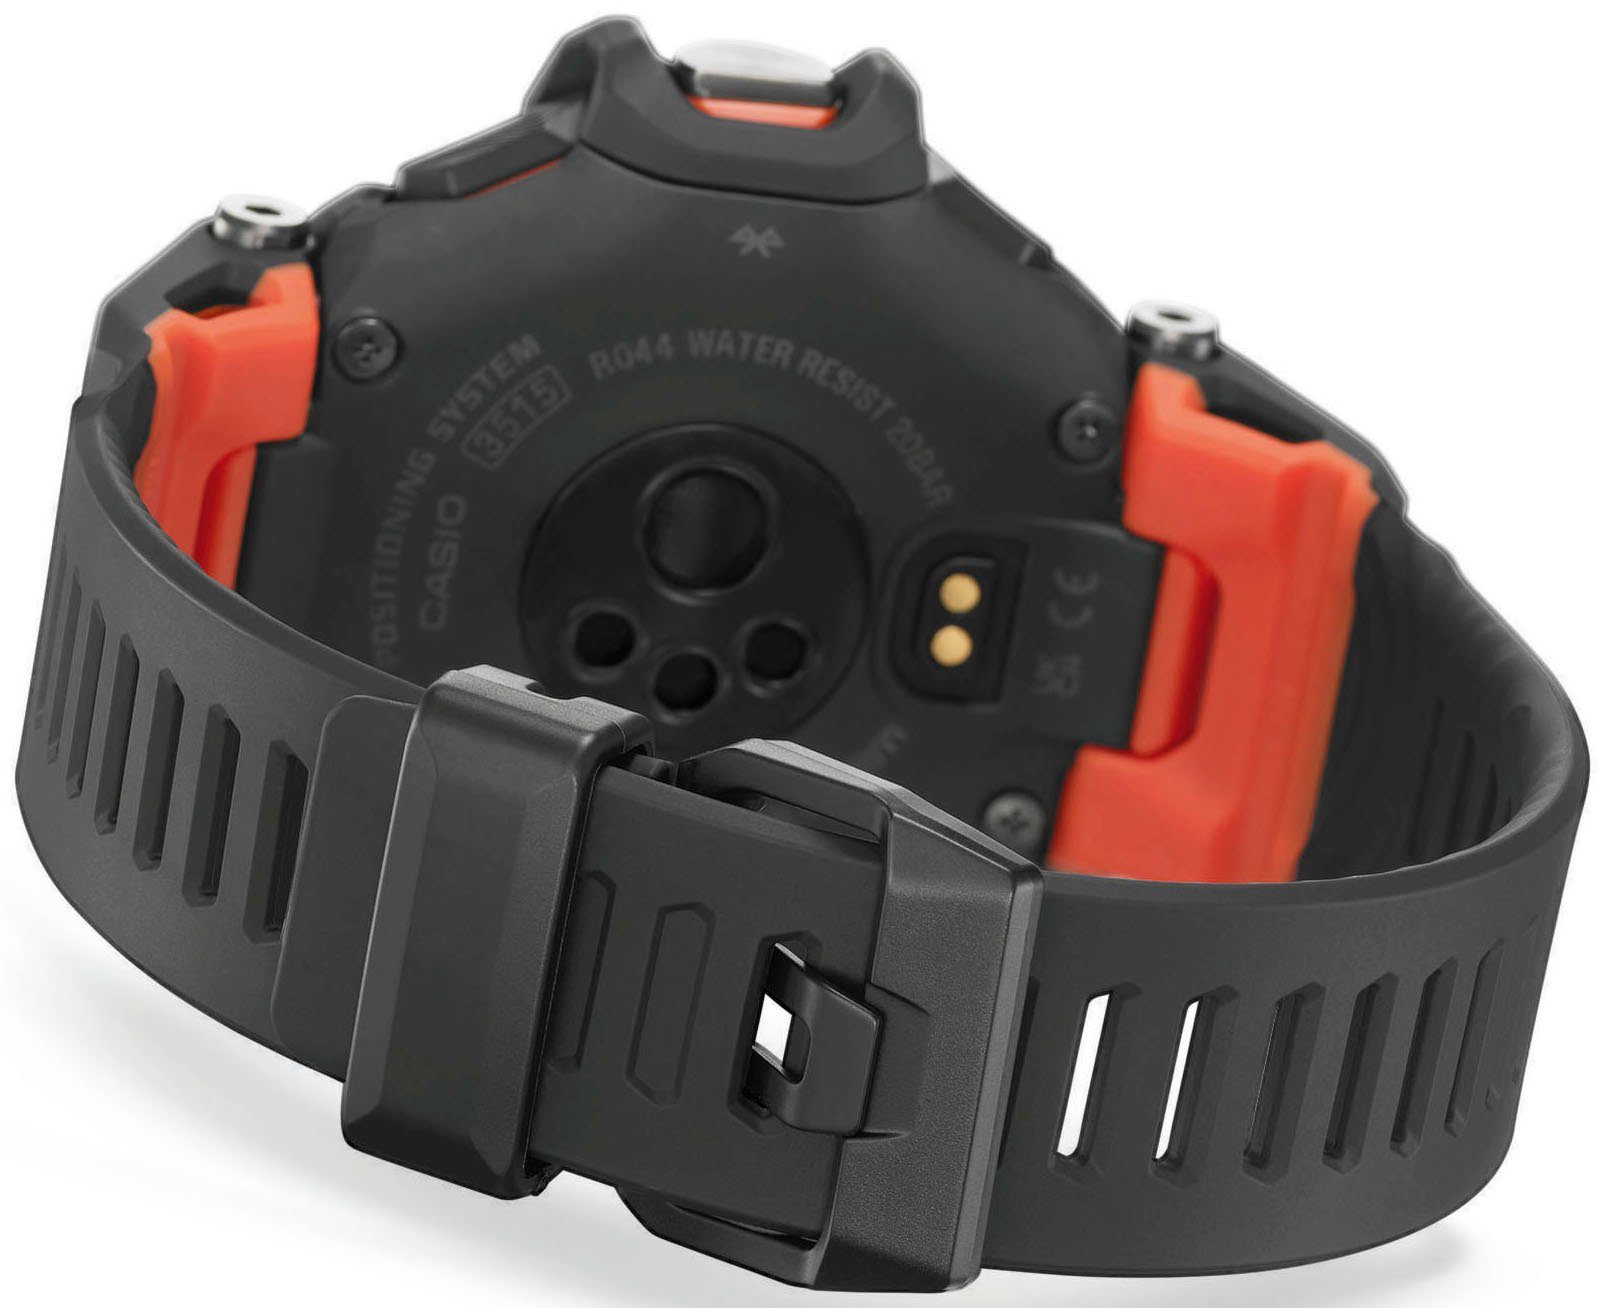 G-SHOCK CASIO Smartwatch, GBD-H2000-1AER Solar